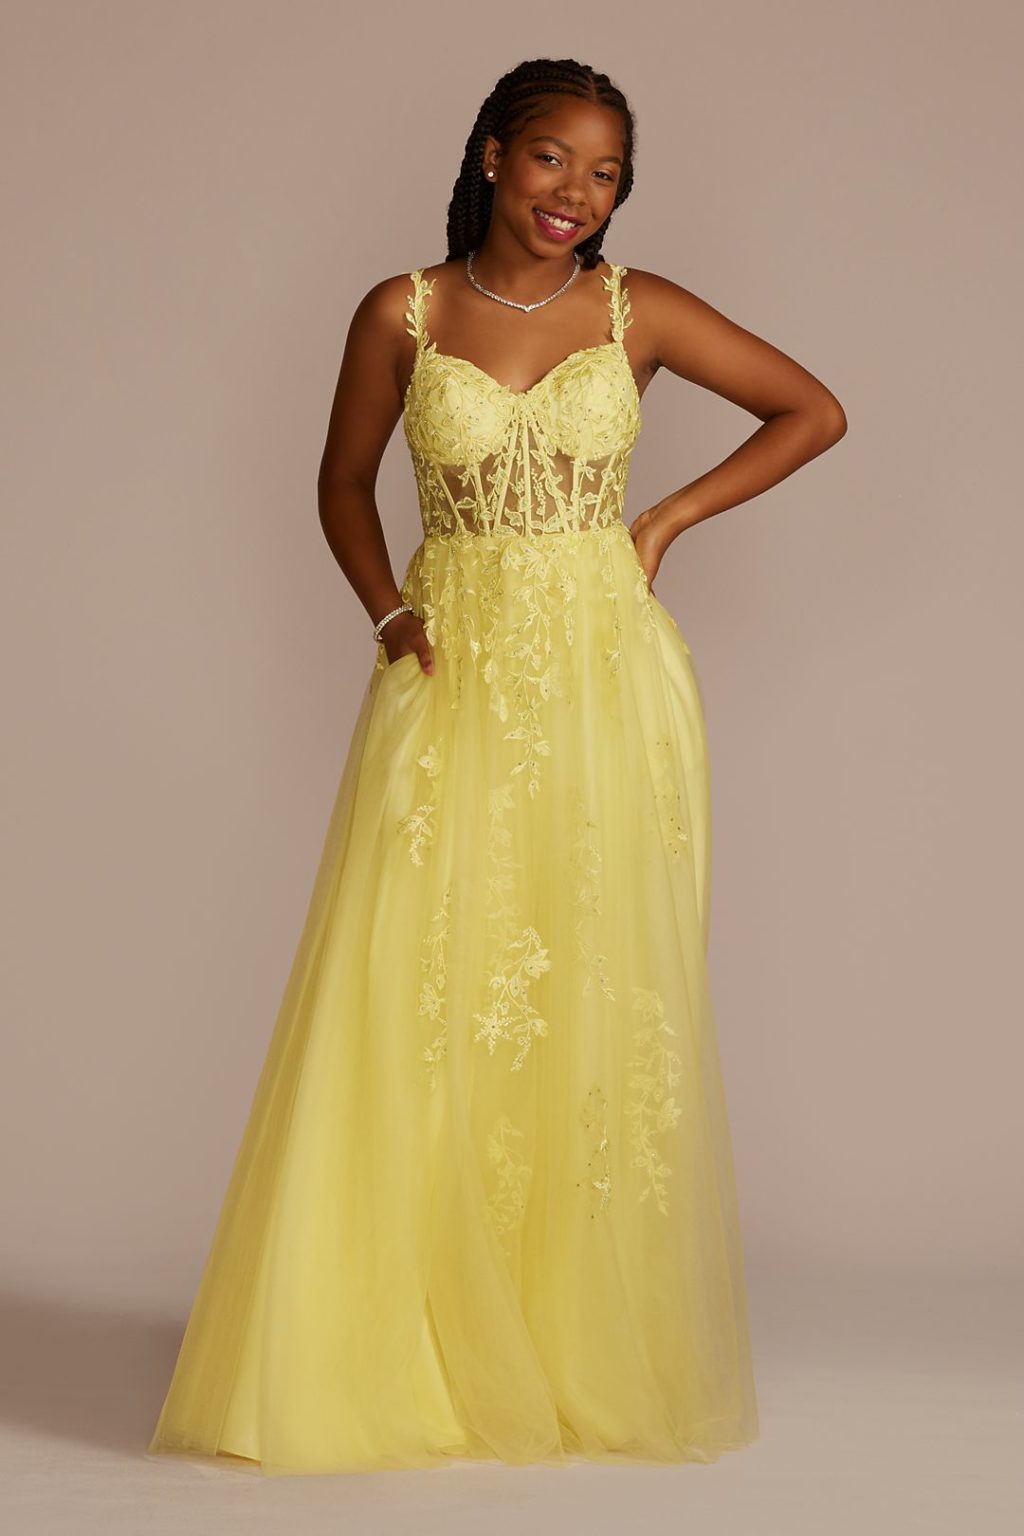 2023 Prom Dress Trends David's Bridal Blog